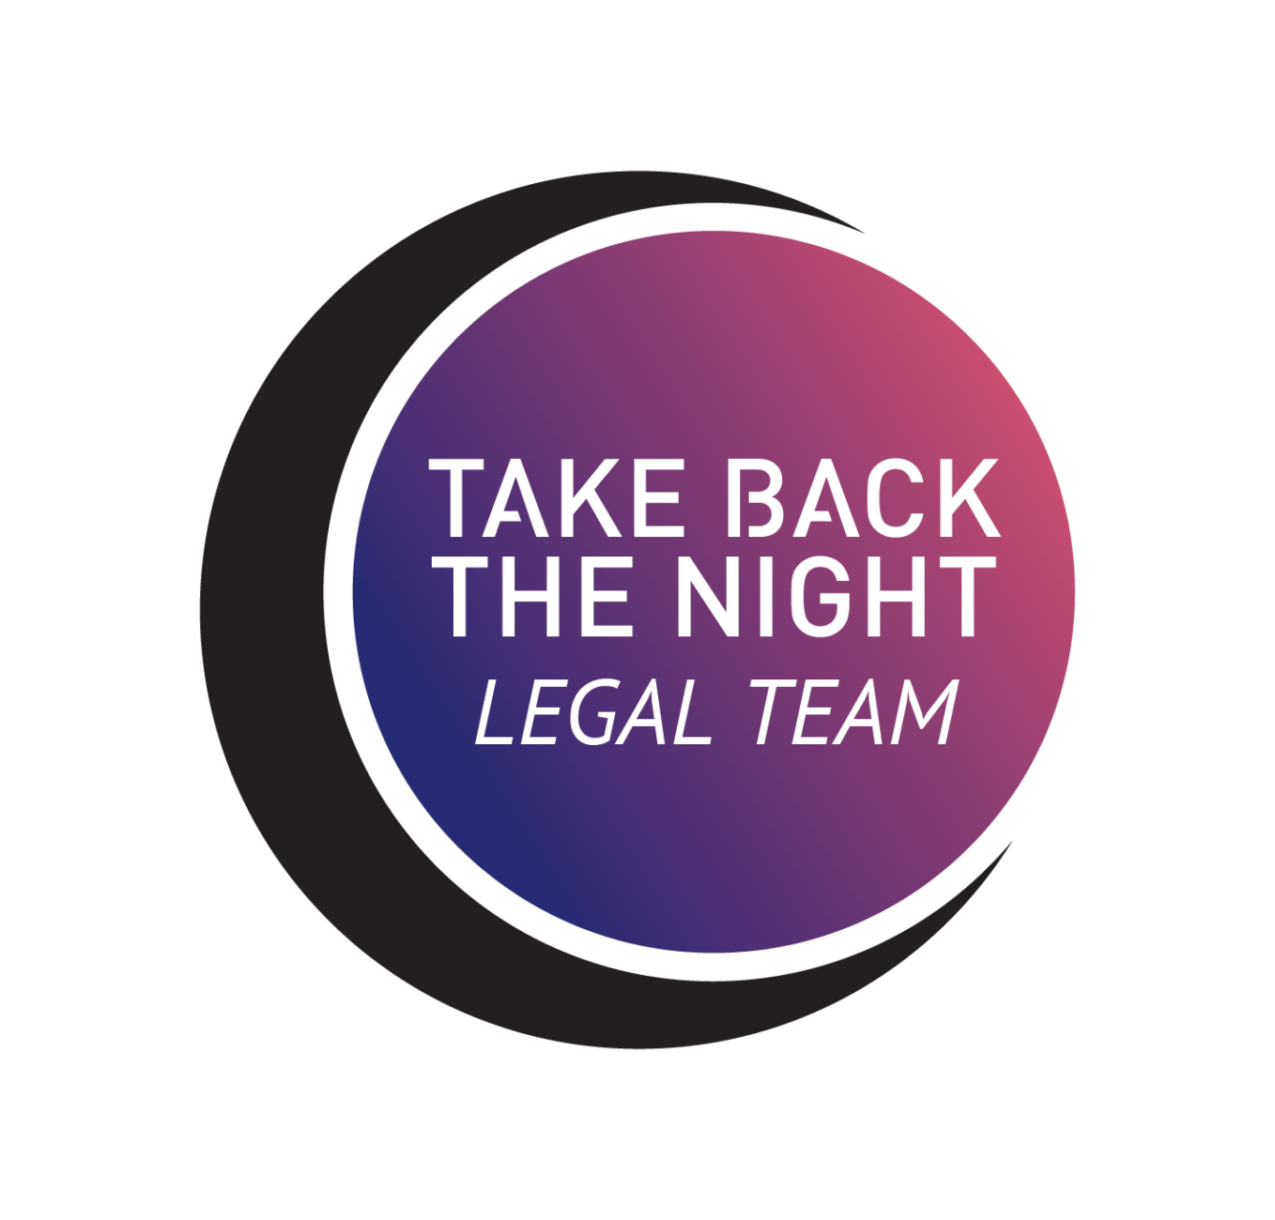   Take Back The Night Legal Team